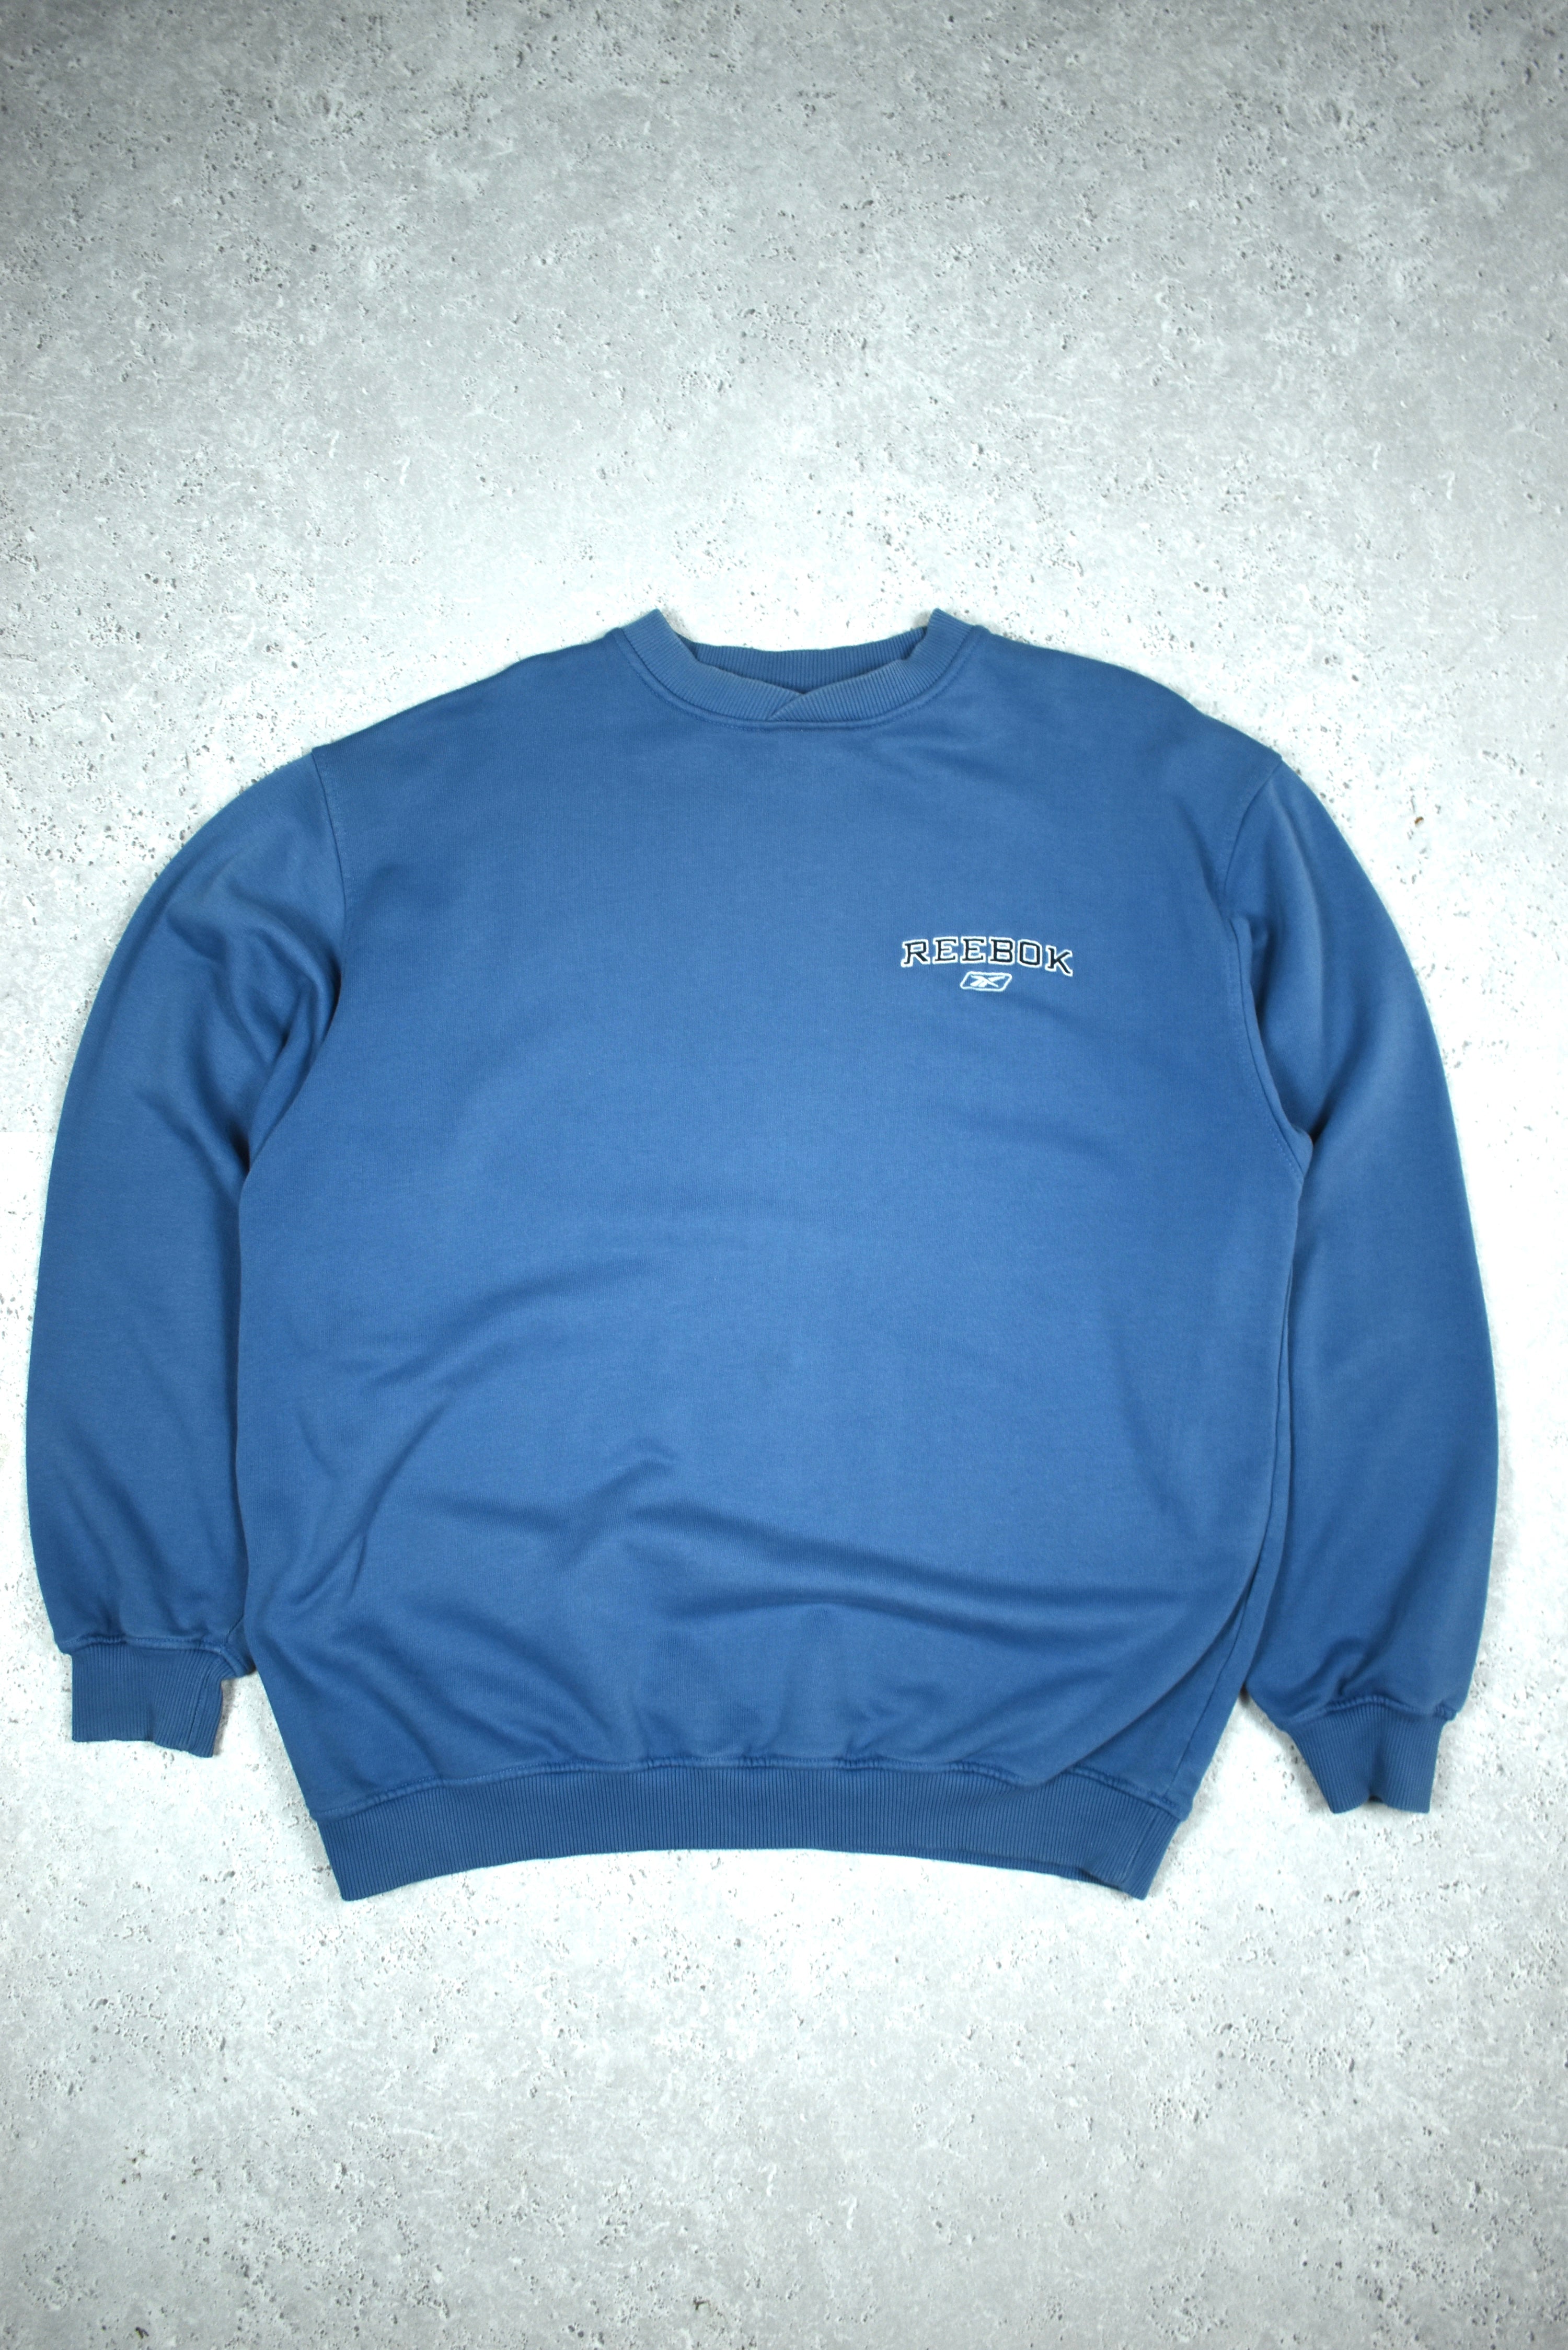 Vintage Reebok Embridery Logo Sweatshirt Large